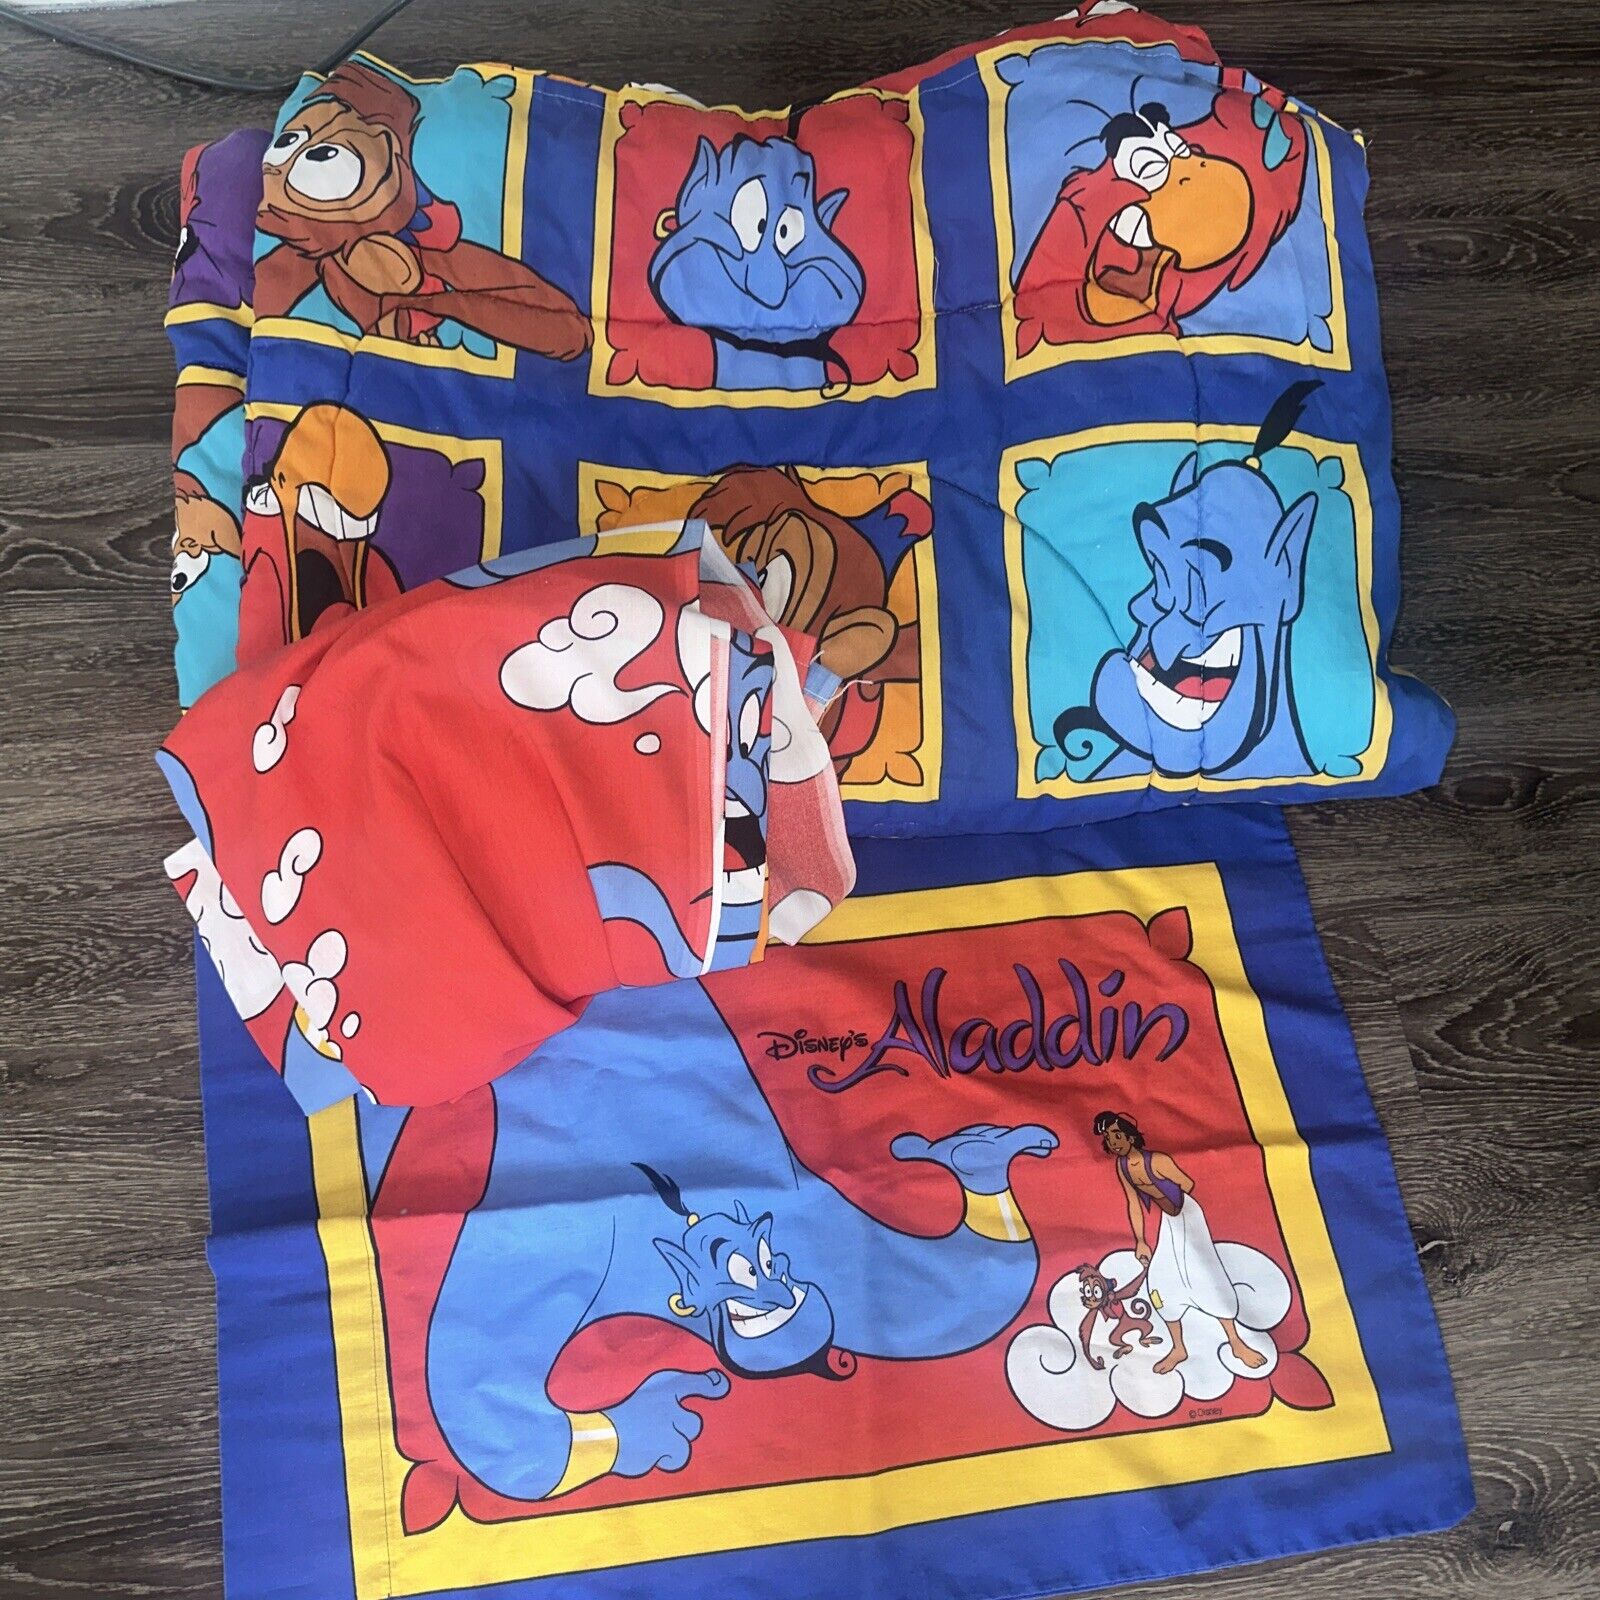 Vintage 1990s Disney Aladdin Comforter, Sheet Flat Pillowcase Twin Size